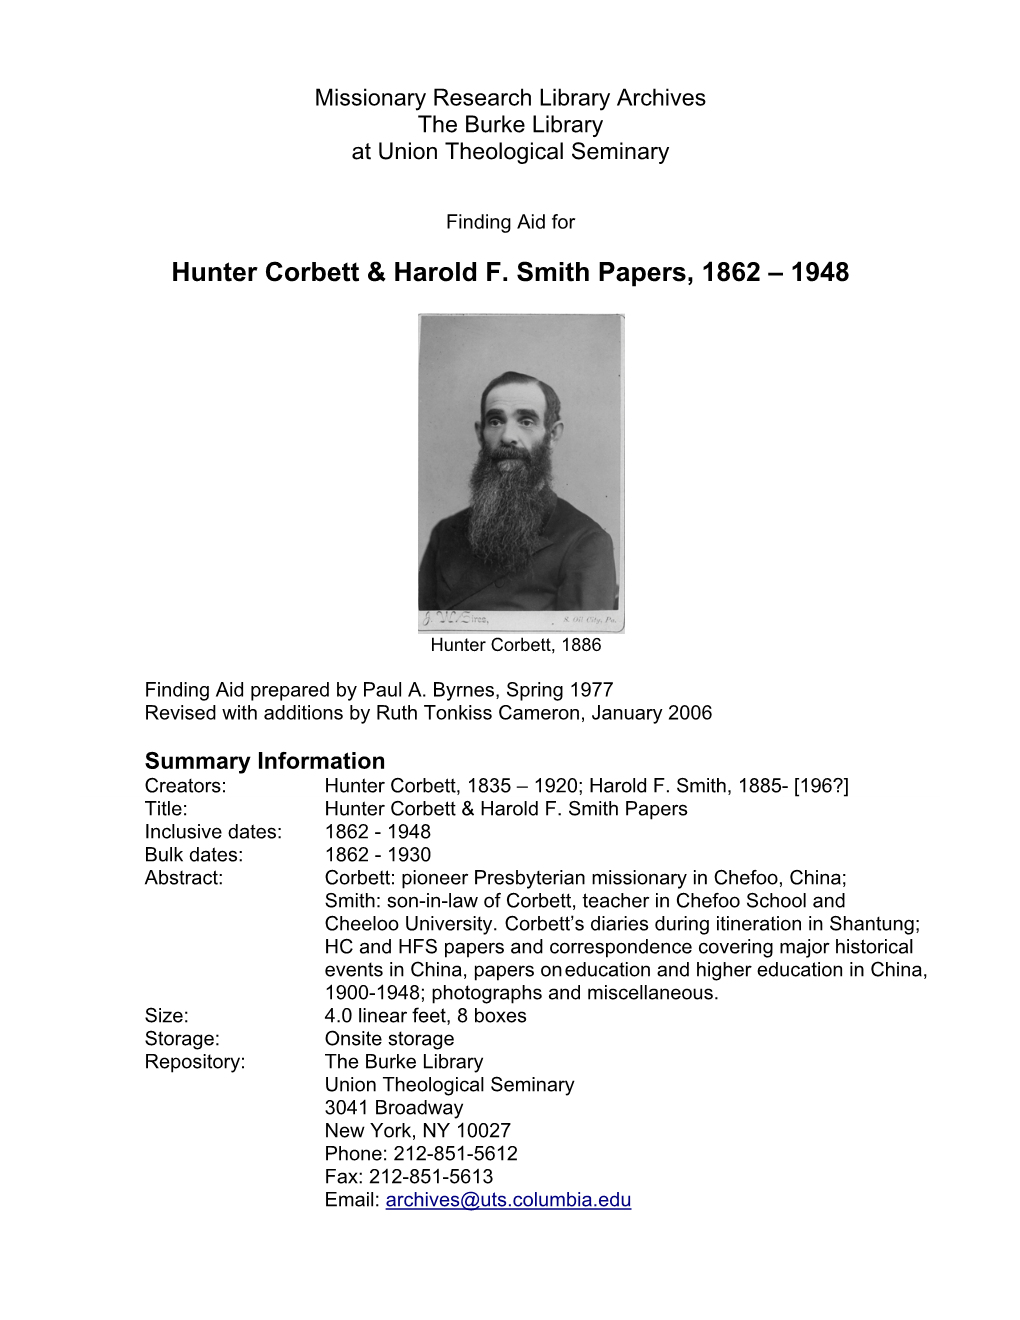 Hunter Corbett & Harold F. Smith Papers, 1862